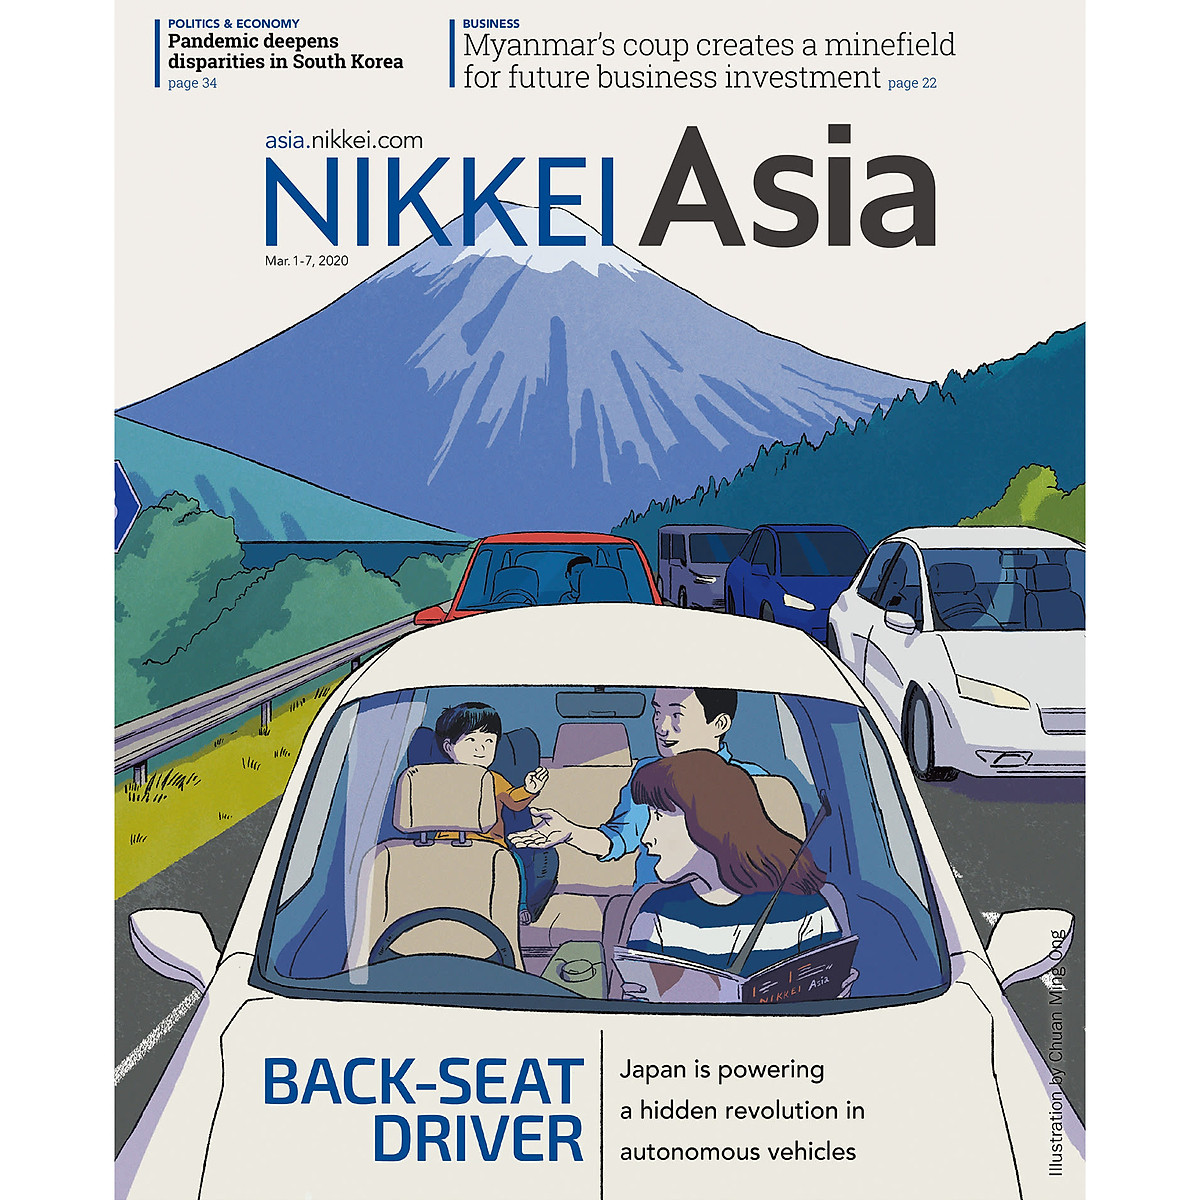 Nikkei Asian Review: Nikkei Asia - 2021: BACK-SEAT DRIVER - 9.21, tạp chí kinh tế nước ngoài, nhập khẩu từ Singapore